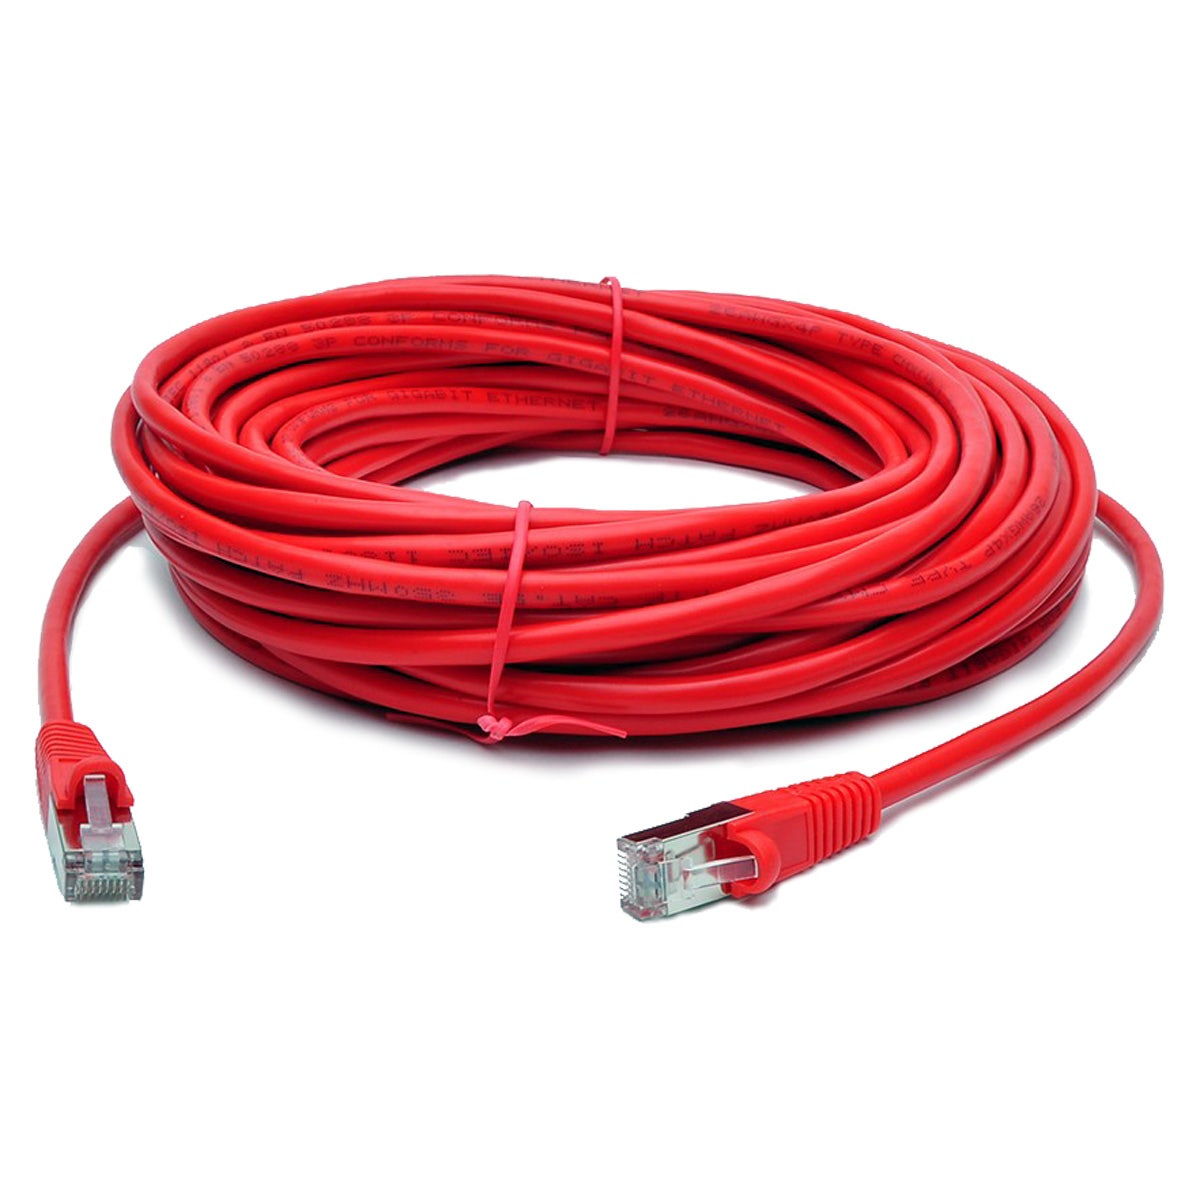 Dimlux 5m Interlink Cable